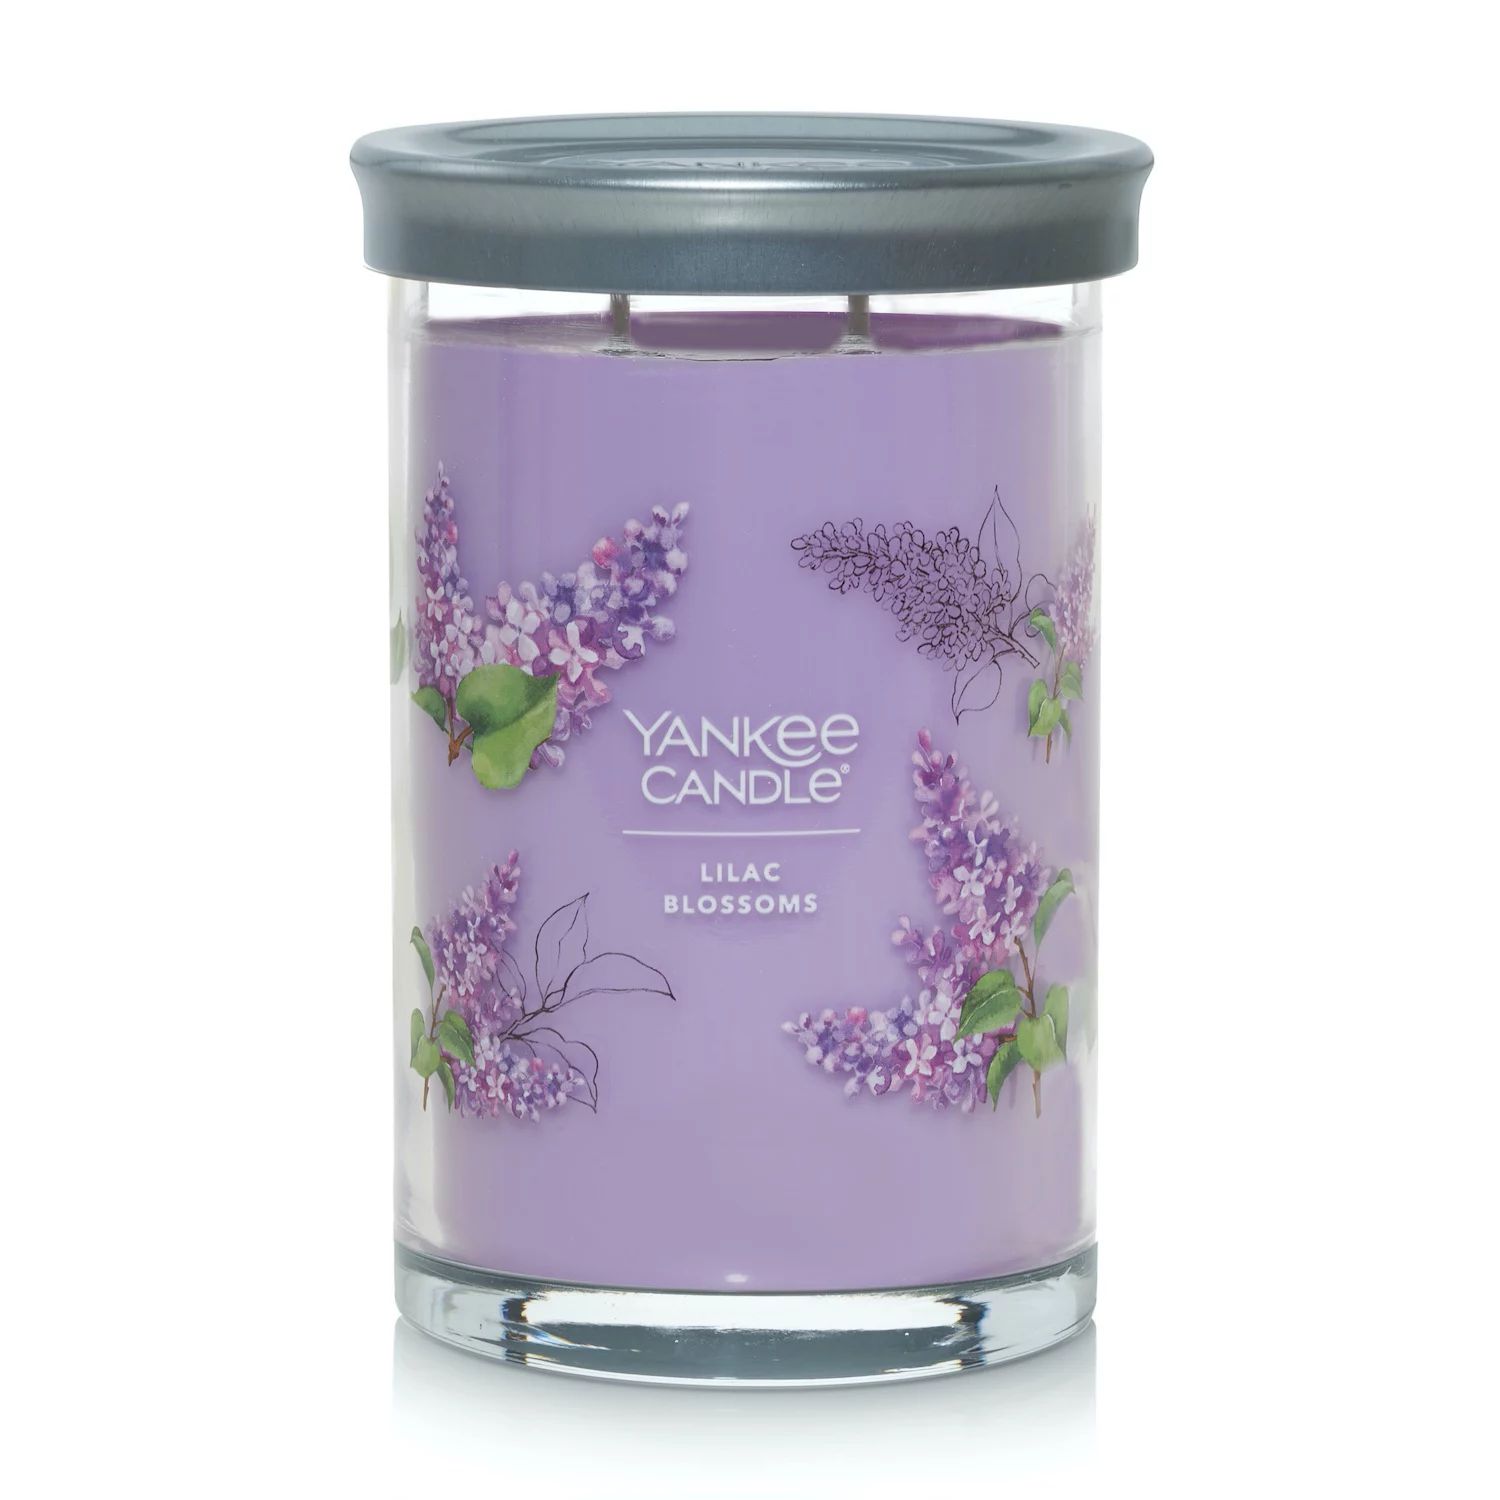 Yankee Candle Lilac Blossoms Signature стаканная свеча с 2 фитилями свеча ароматизированная yankee candle теплый кашемир 411 г